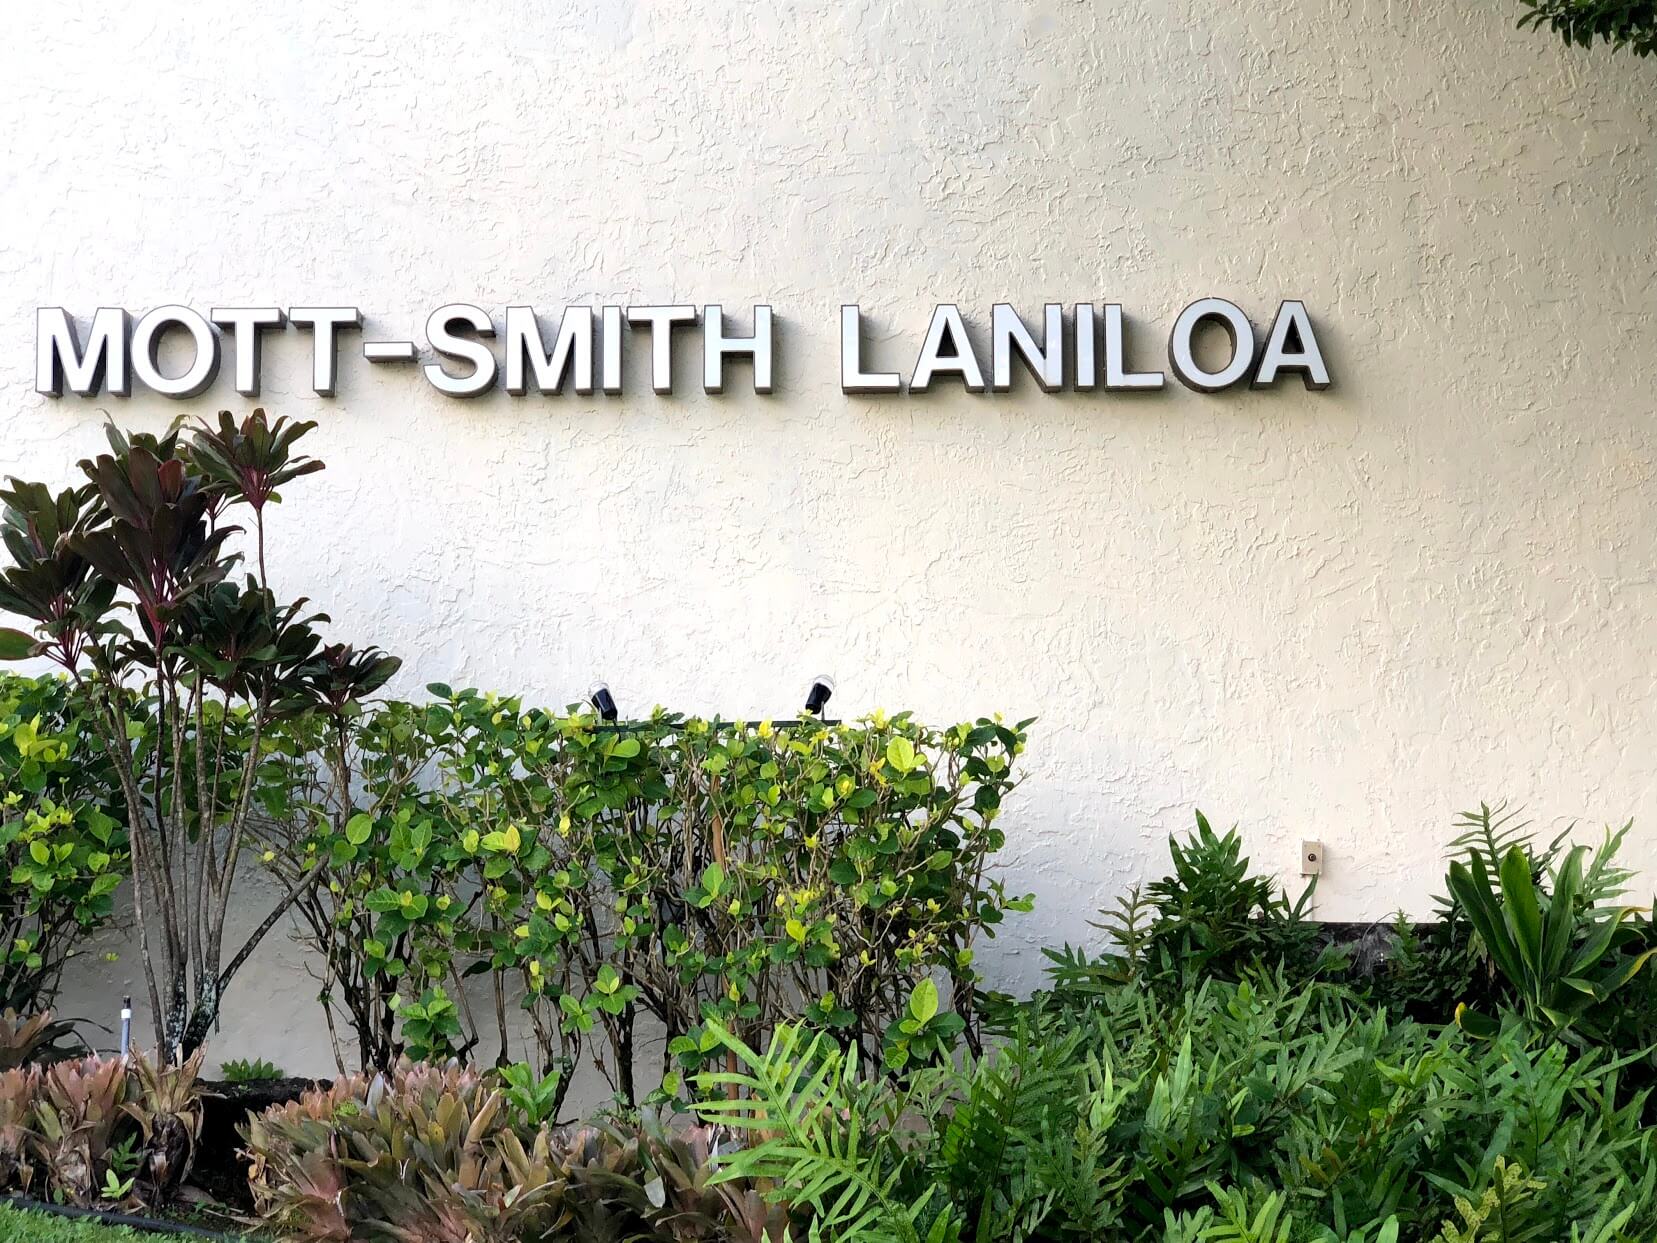 Mott-Smith Laniloaの看板